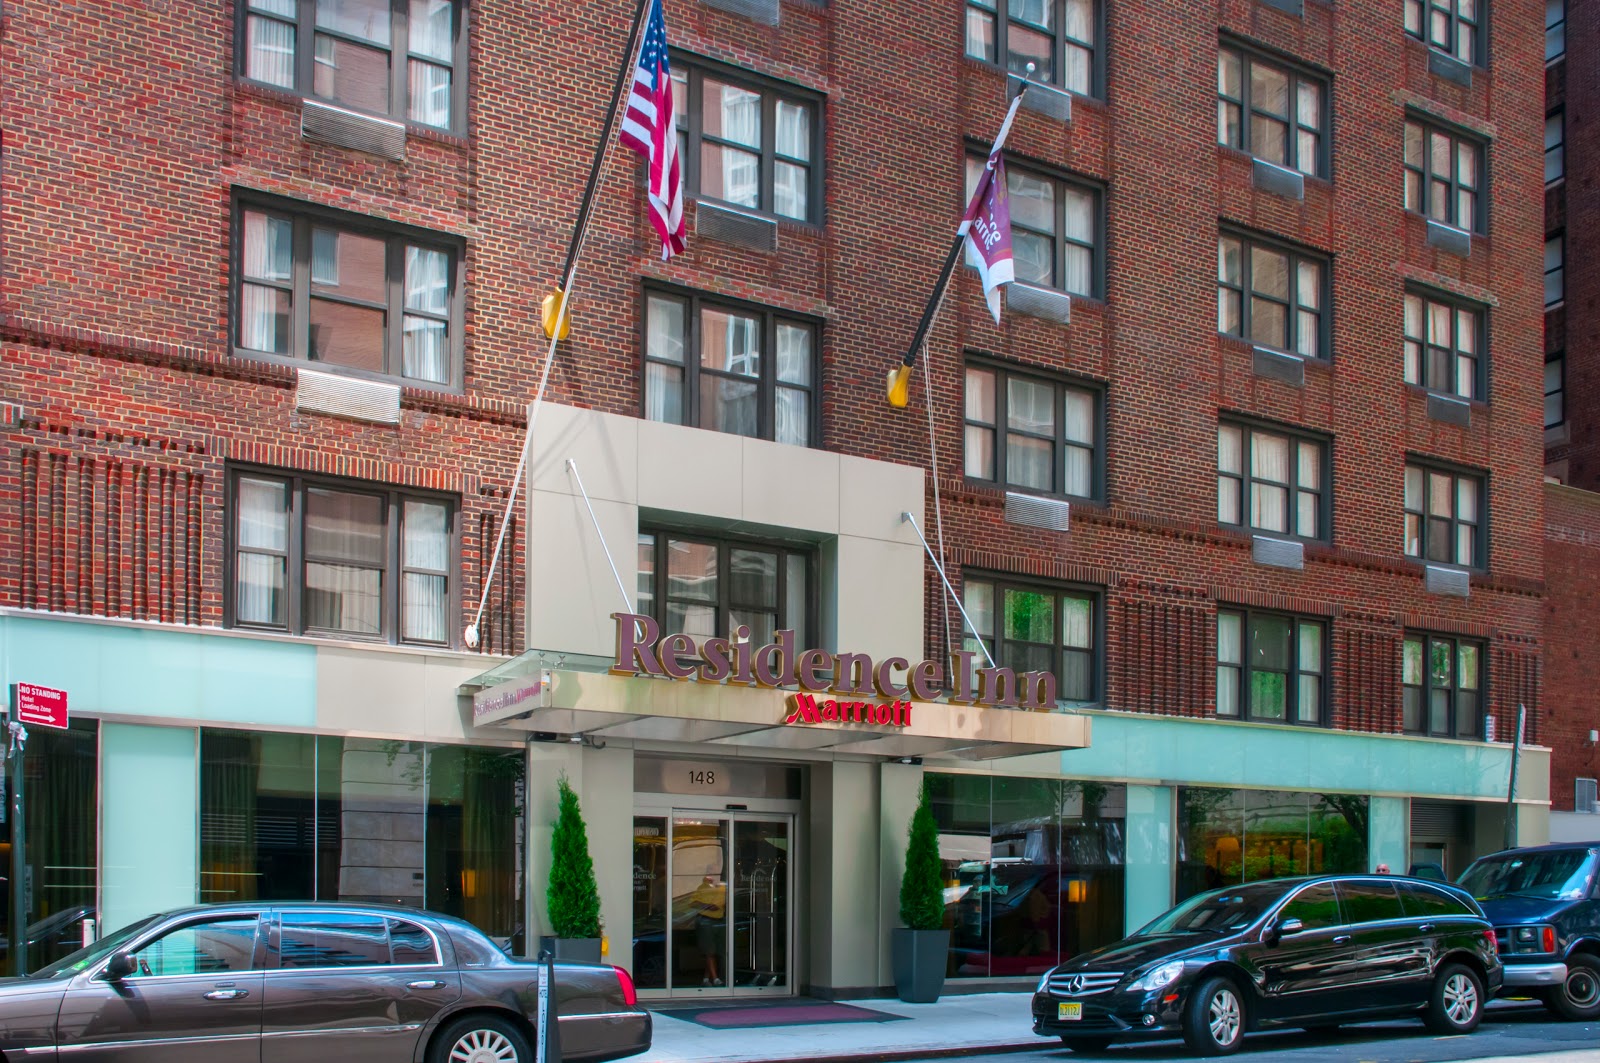 Photo of Residence Inn New York Manhattan/Midtown East in New York City, New York, United States - 1 Picture of Point of interest, Establishment, Lodging